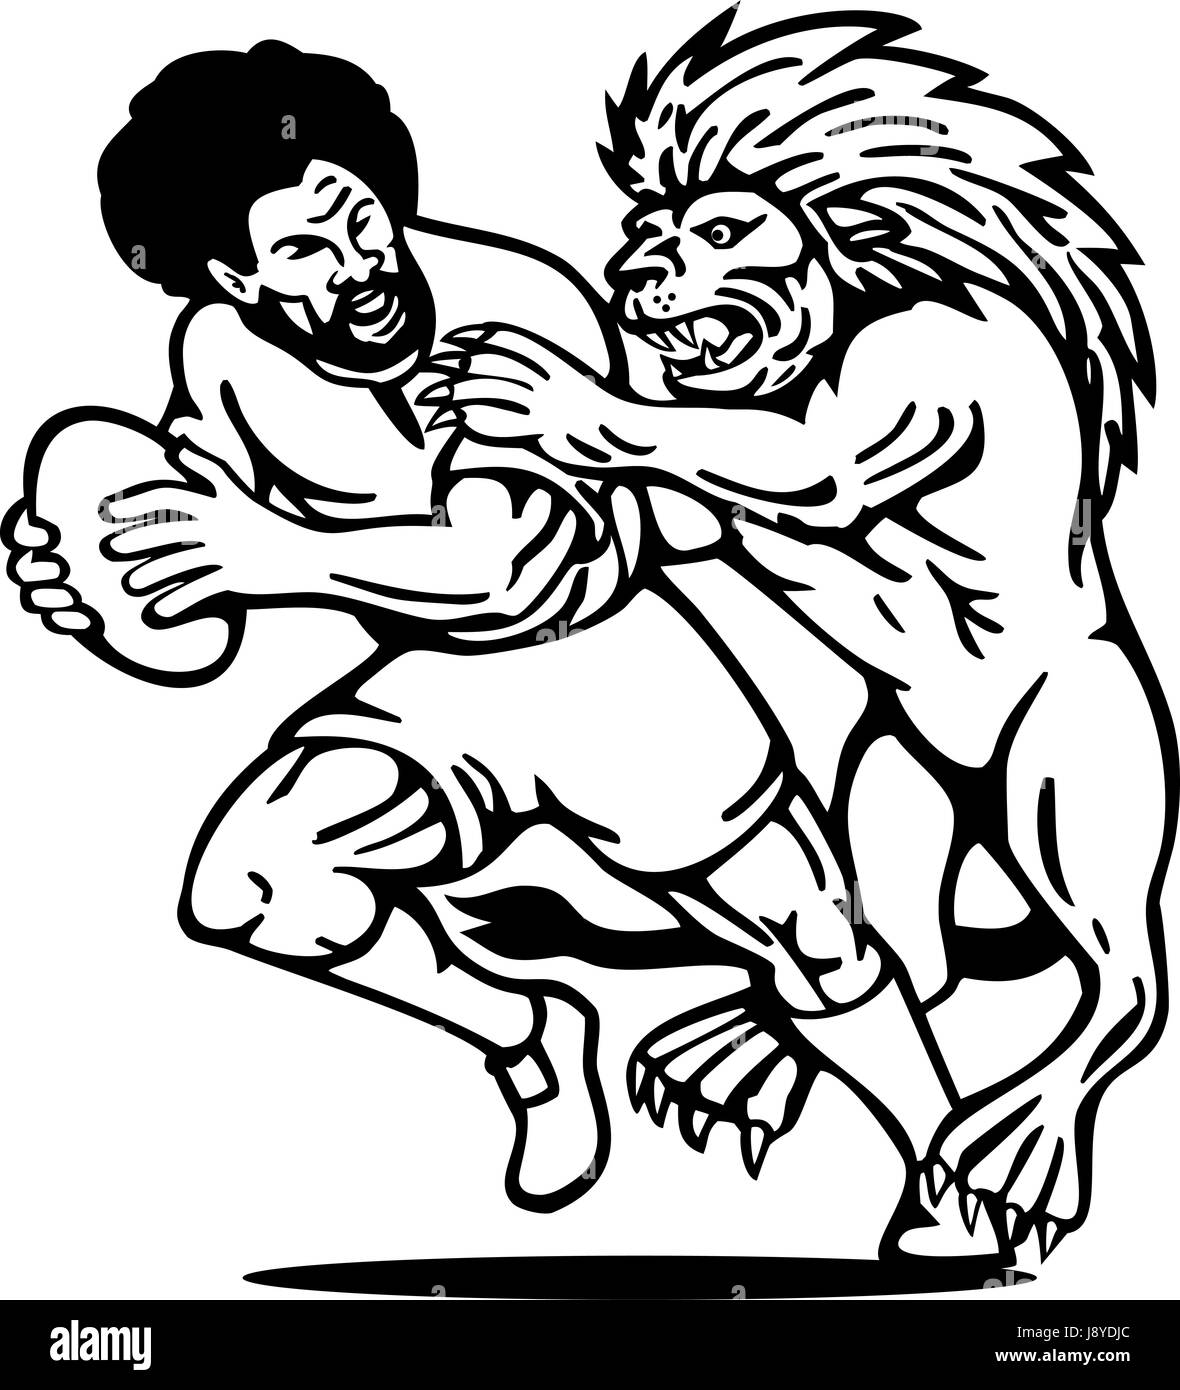 ball, tackle, male, masculine, lion, cat, big cat, feline predator, Stock Photo